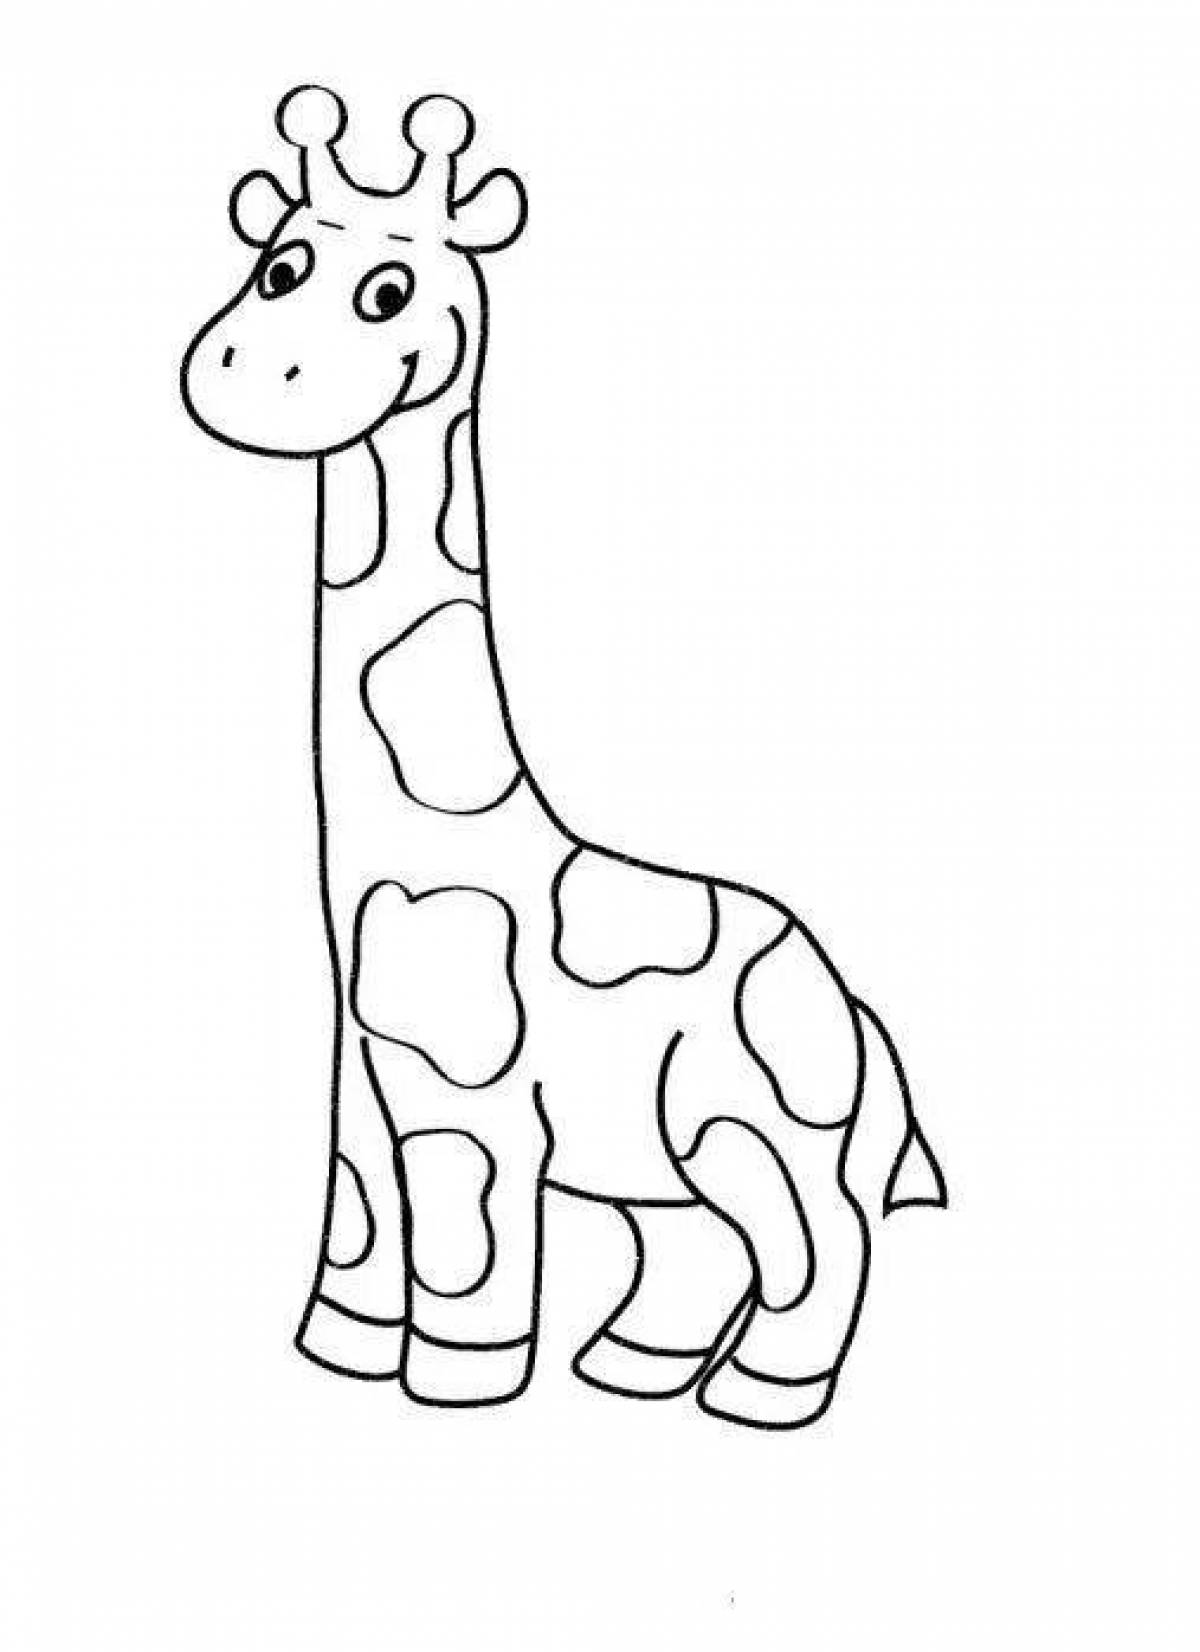 Coloring page dazzling giraffe